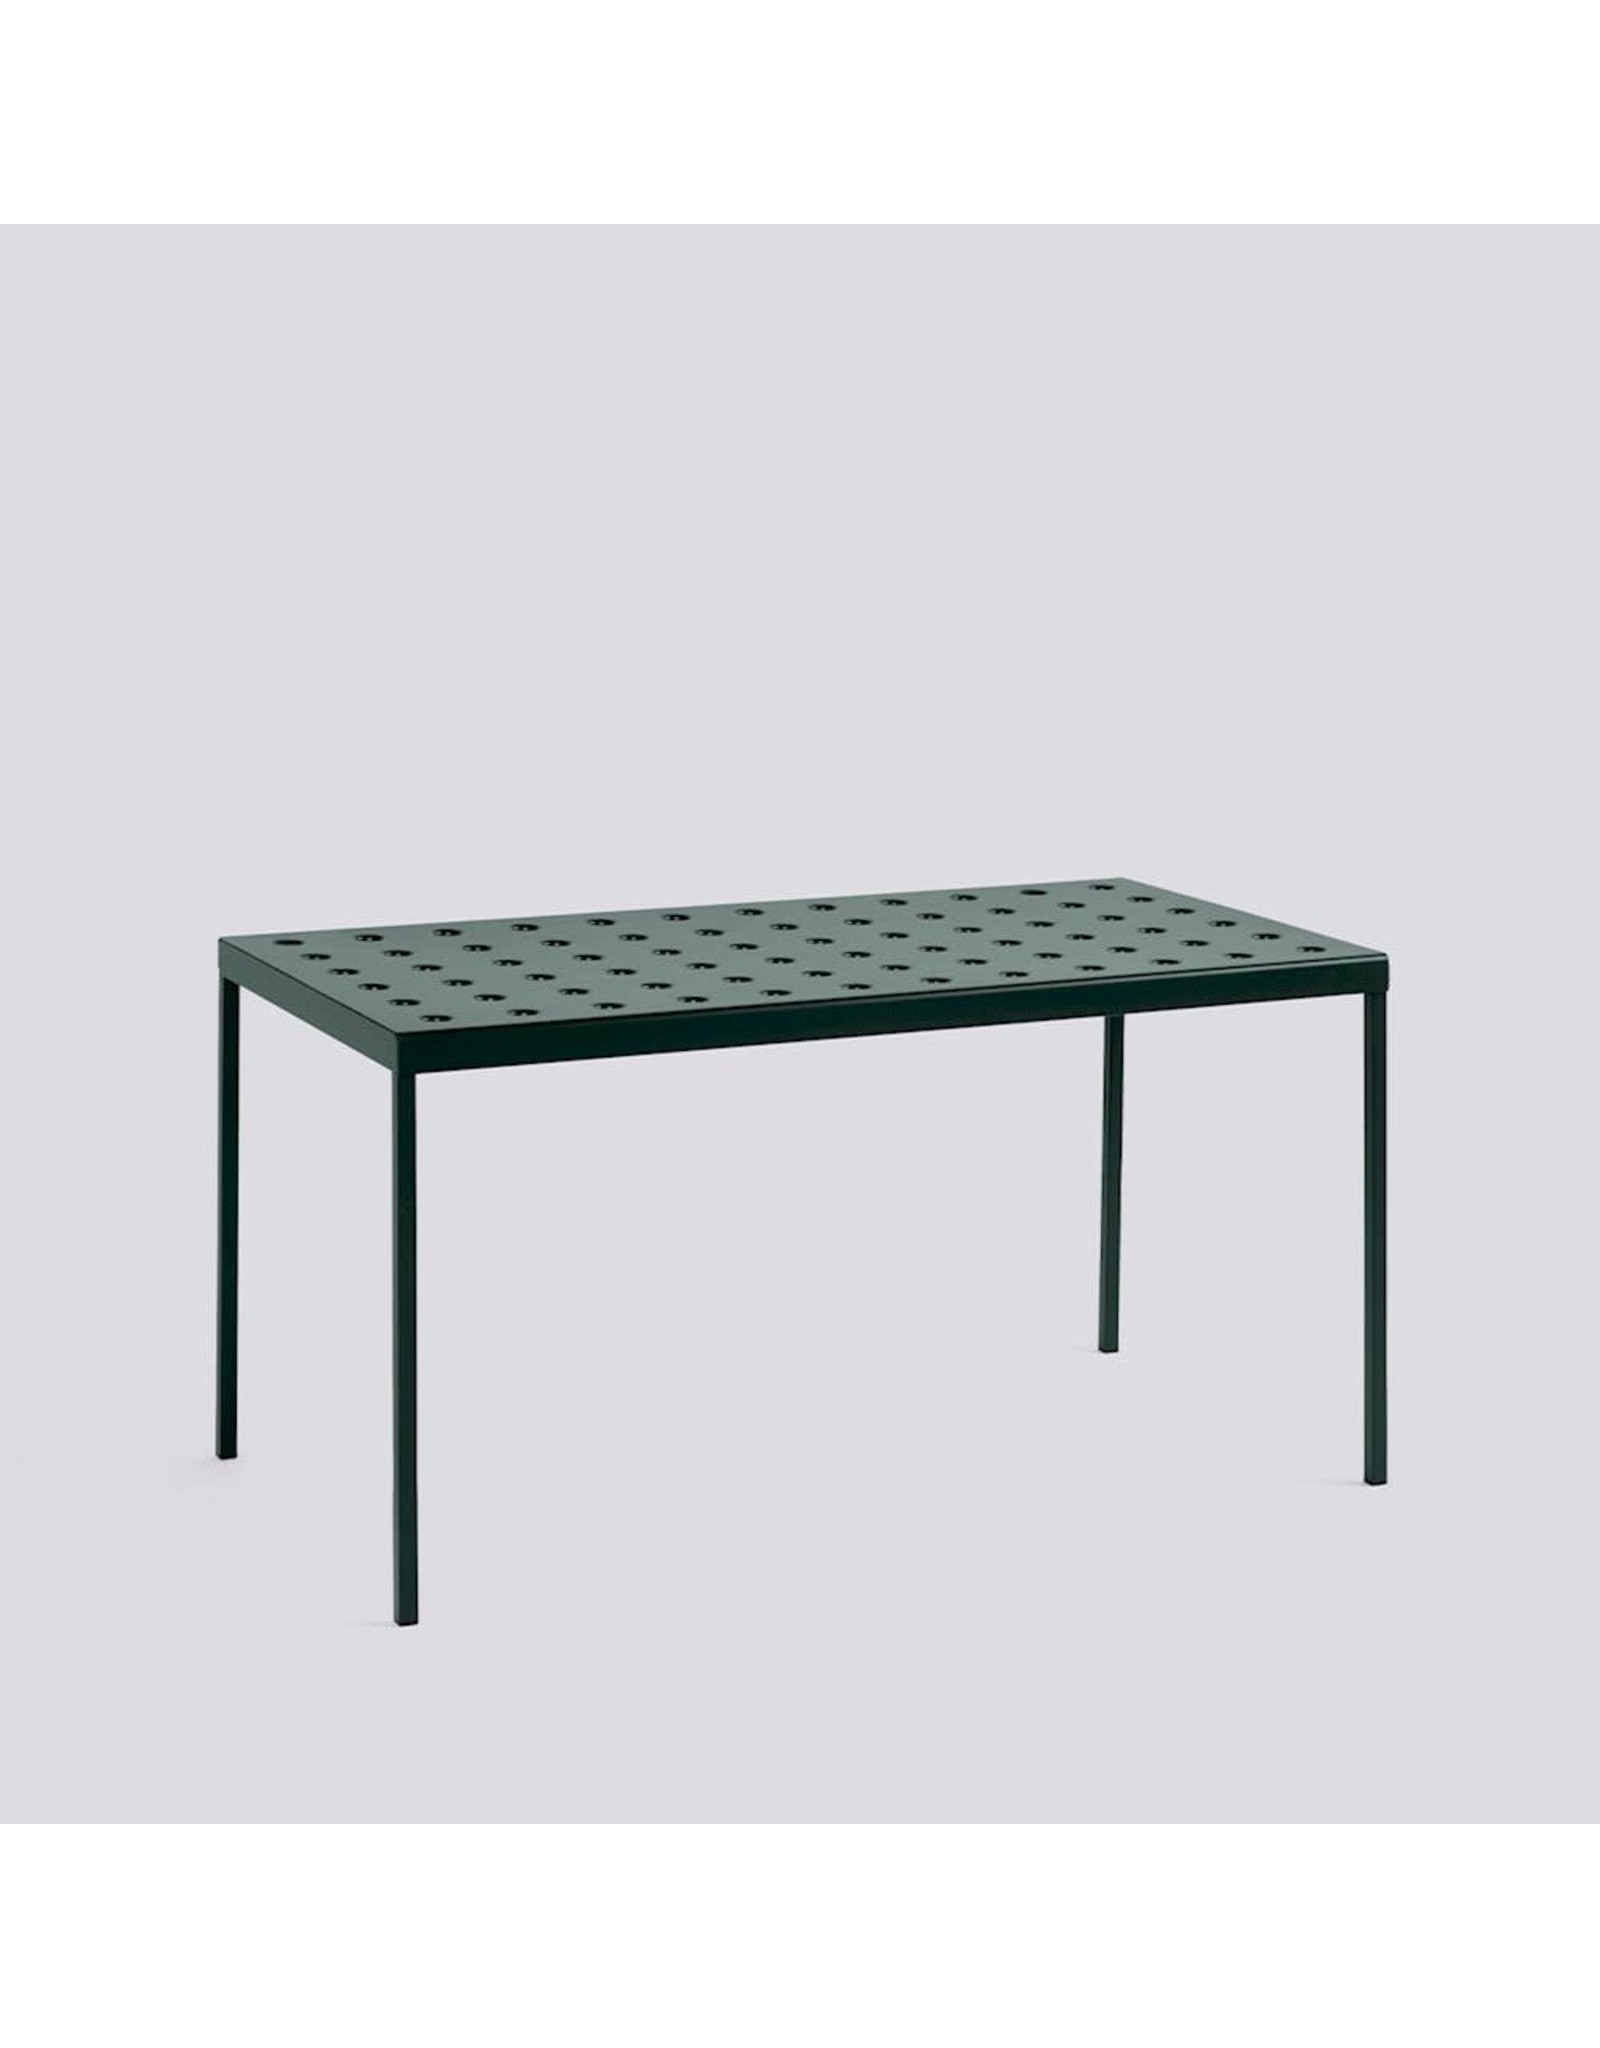 HAY BALCONY TABLE-L144 X W76 X H74 4 LEGS-DARK FOREST POWDER COATED STEEL